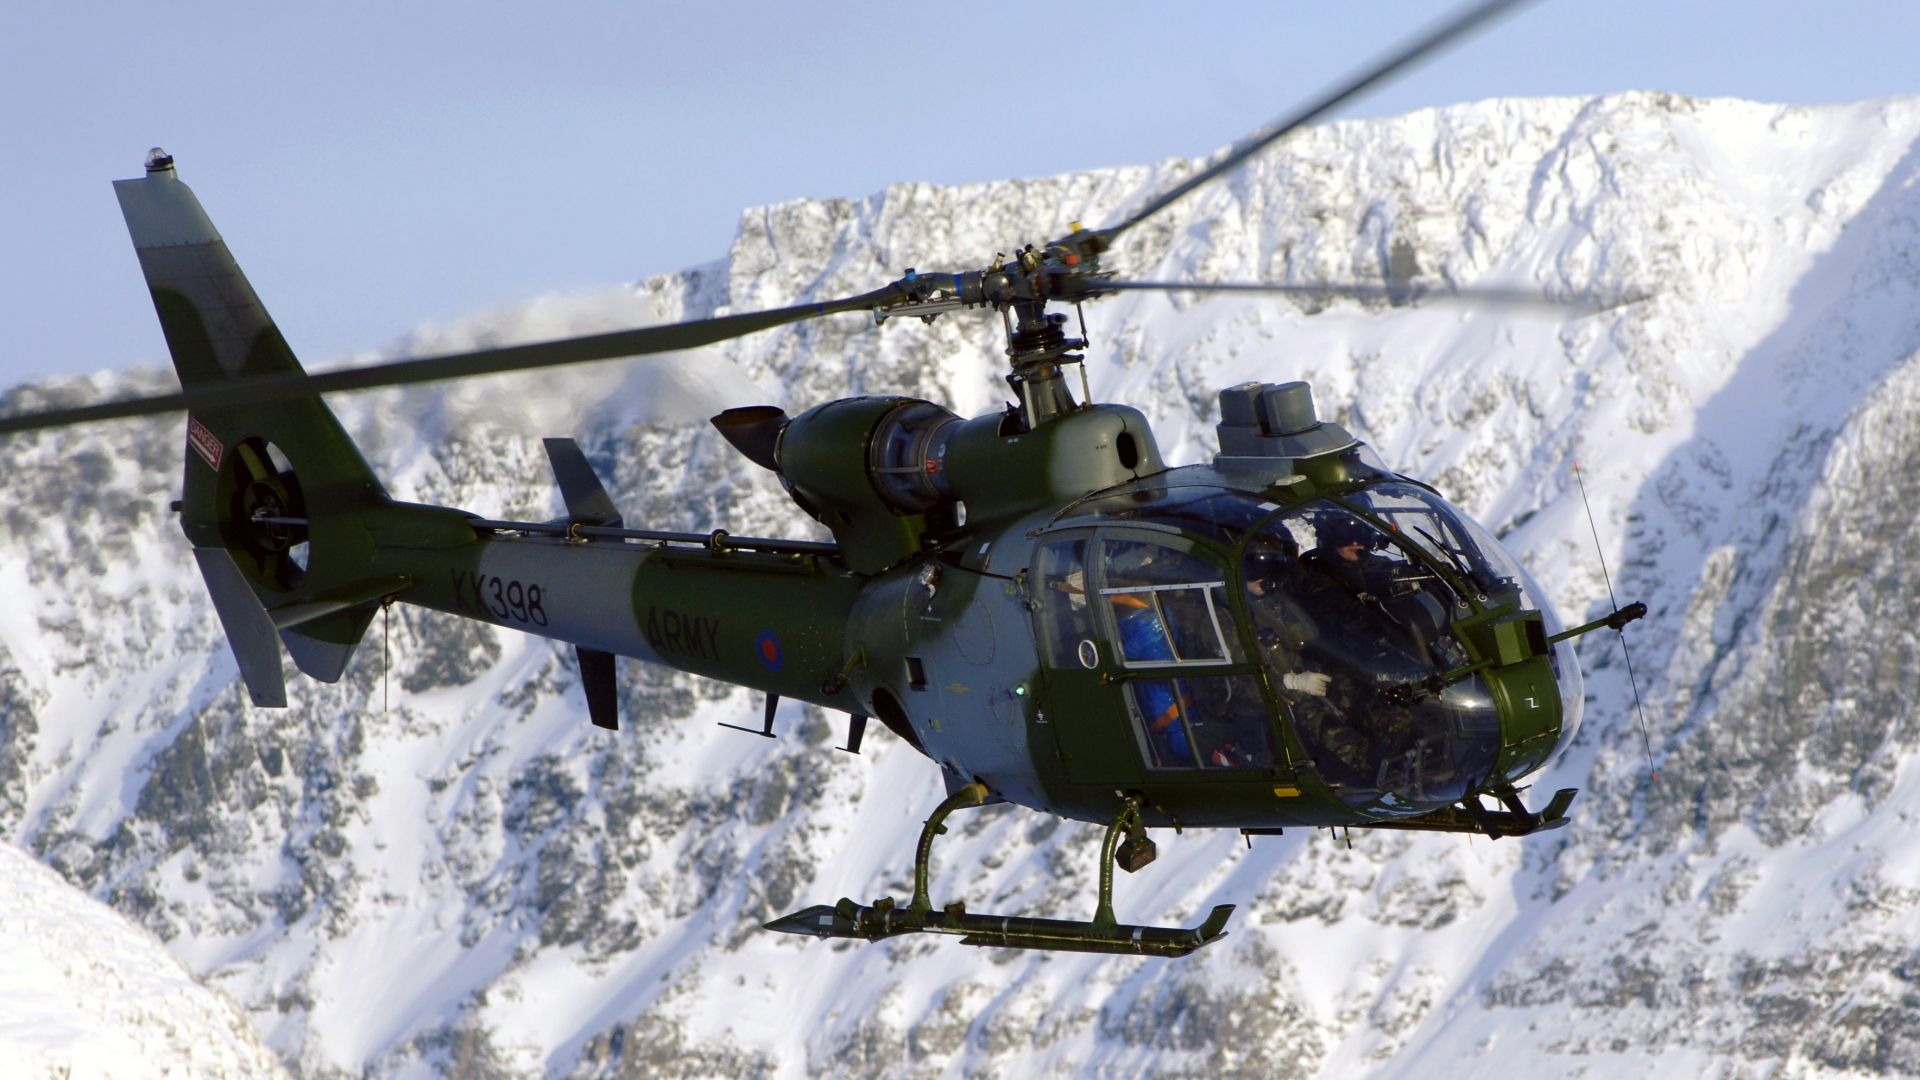 СА 341, Газель, вертолет, Армия Франции, ВВС Франции, SA 341, Sud-Aviation Gazelle, helicopter, France Army, France Air Force (horizontal)